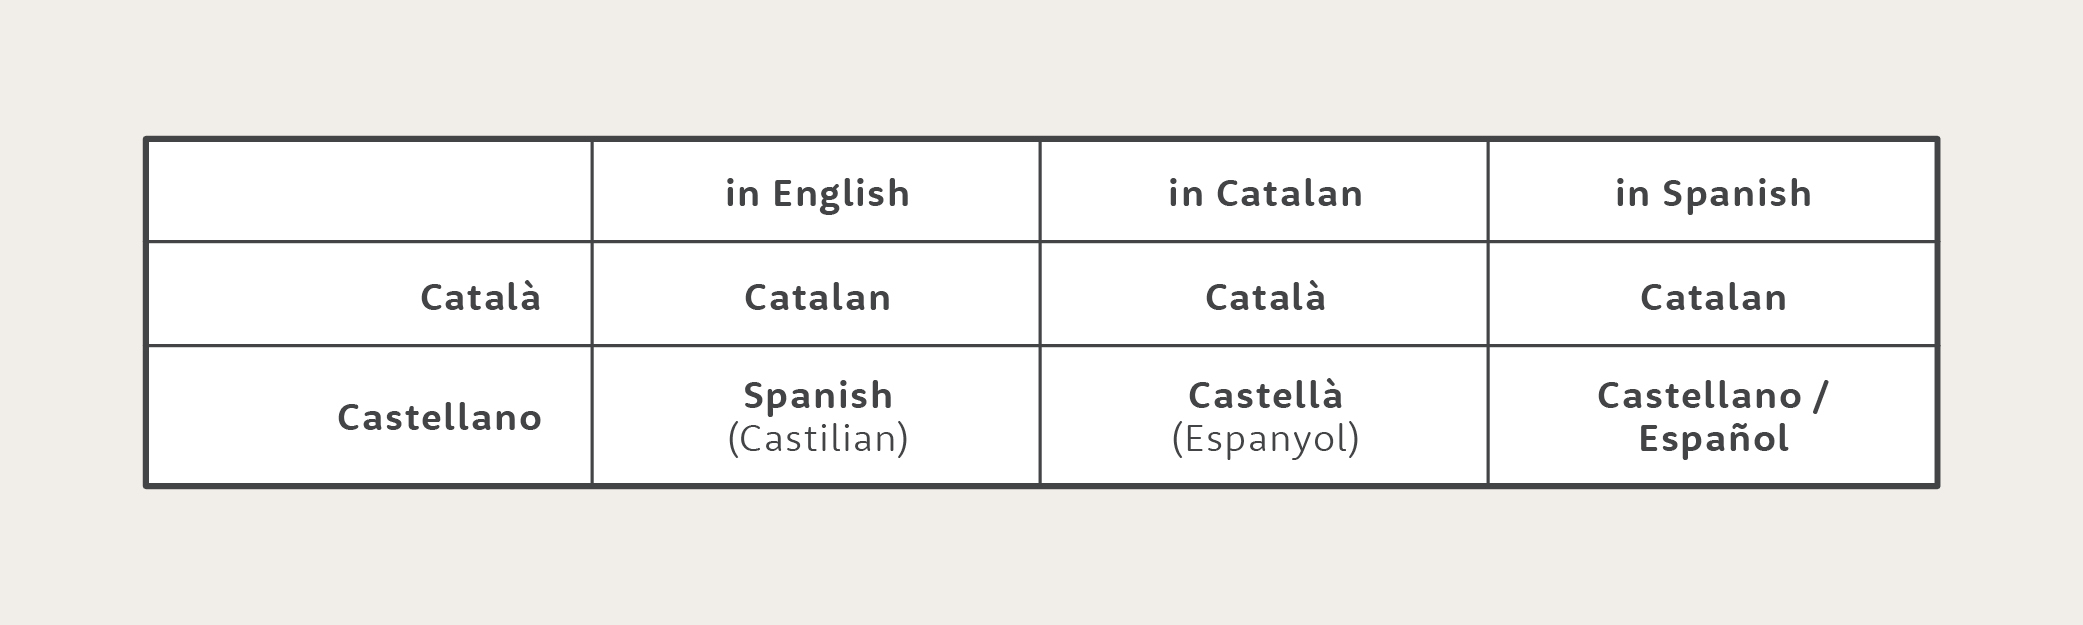 Do you speak Catalan? Parles Català?